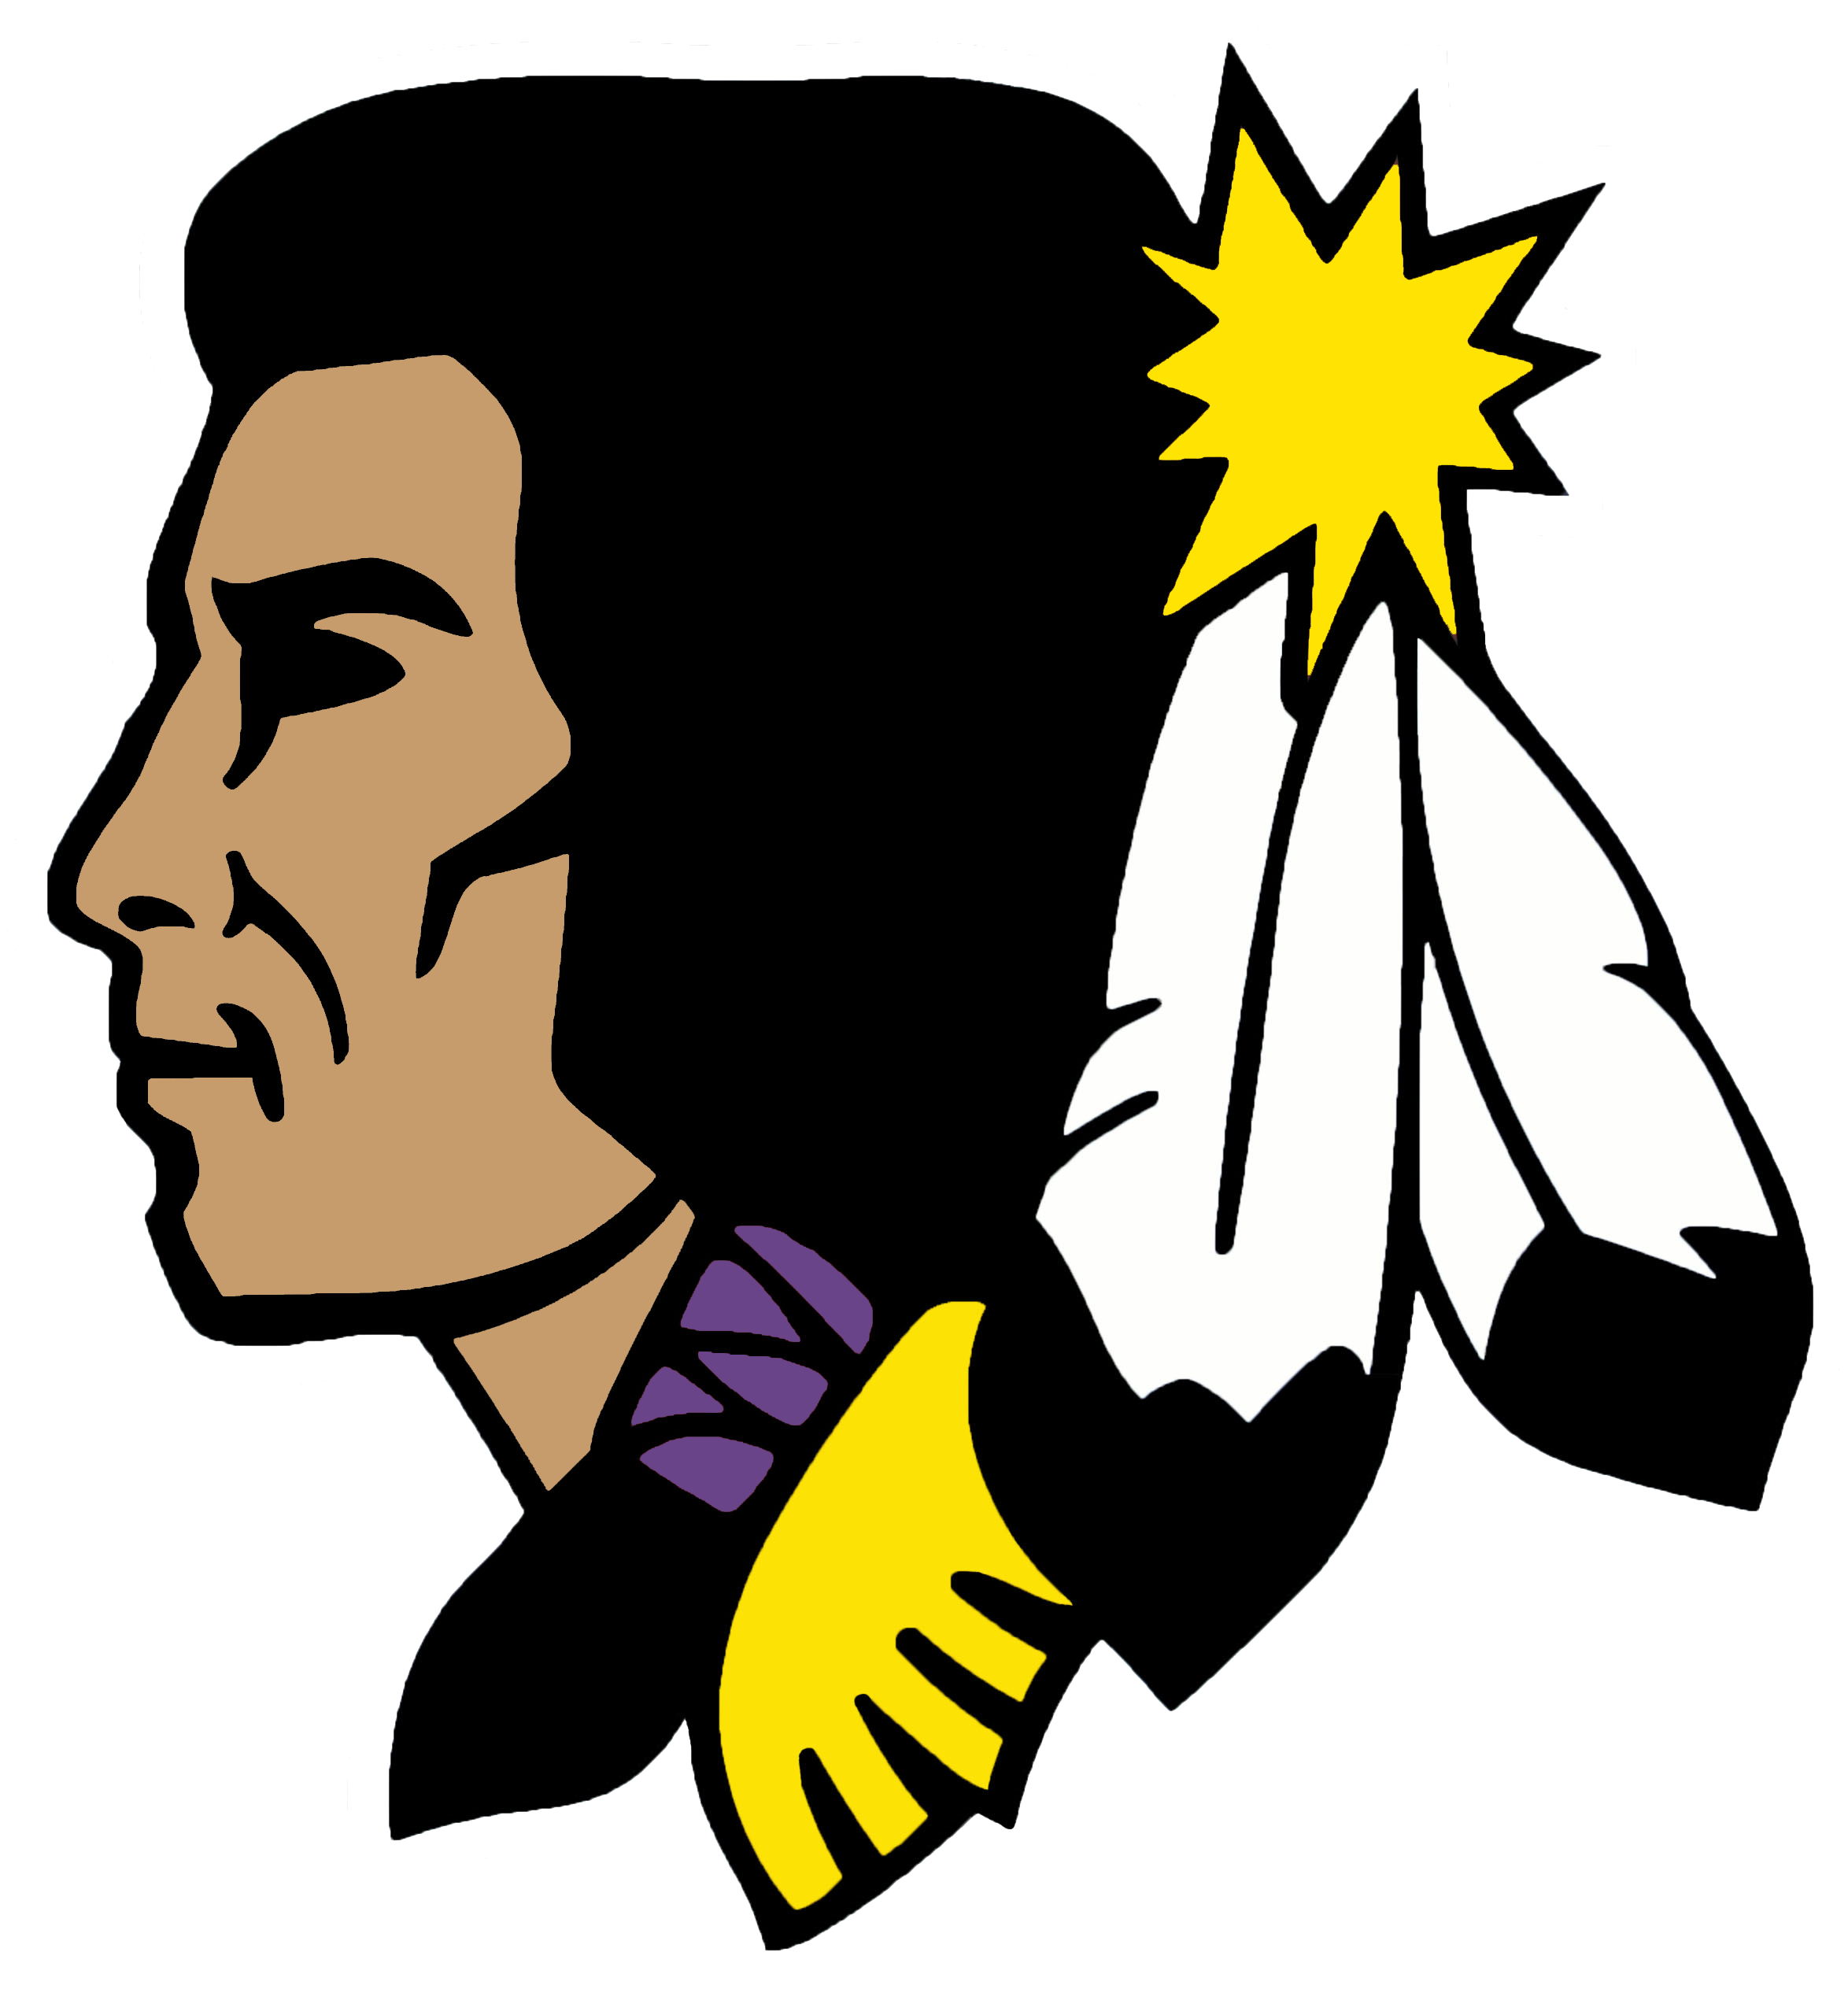 Bob Harding-Shawmut Elementary School Indian mascot